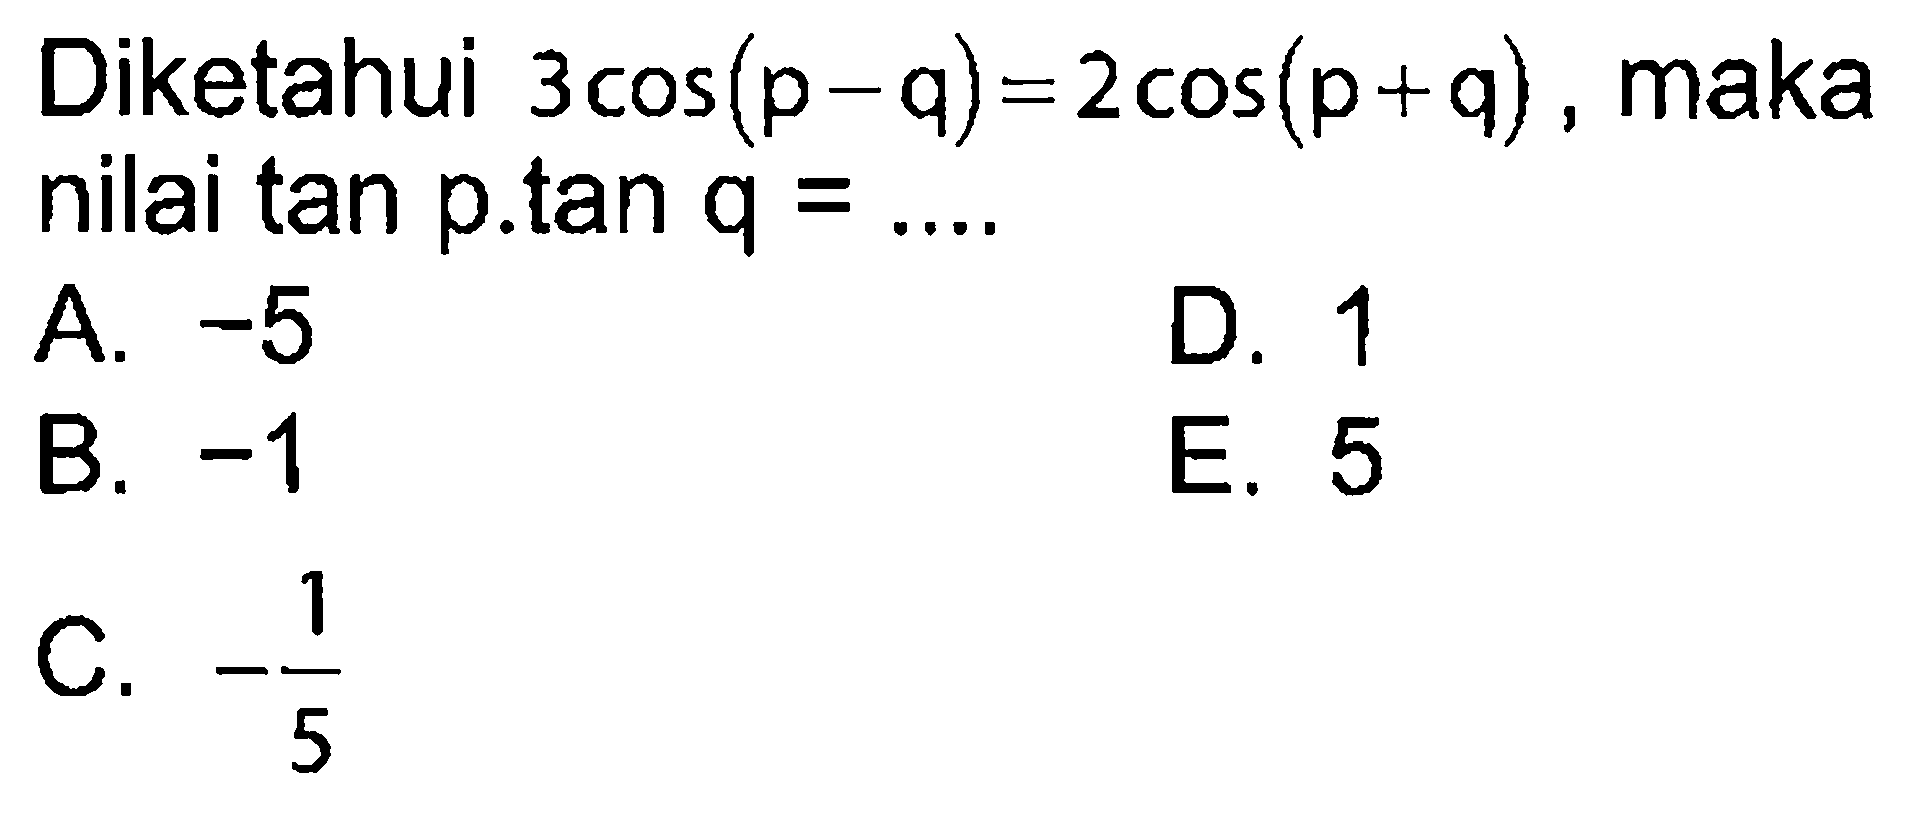 Diketahui 3cos(p-q)=2cos(p+q), maka nilai tan p.tan q=....